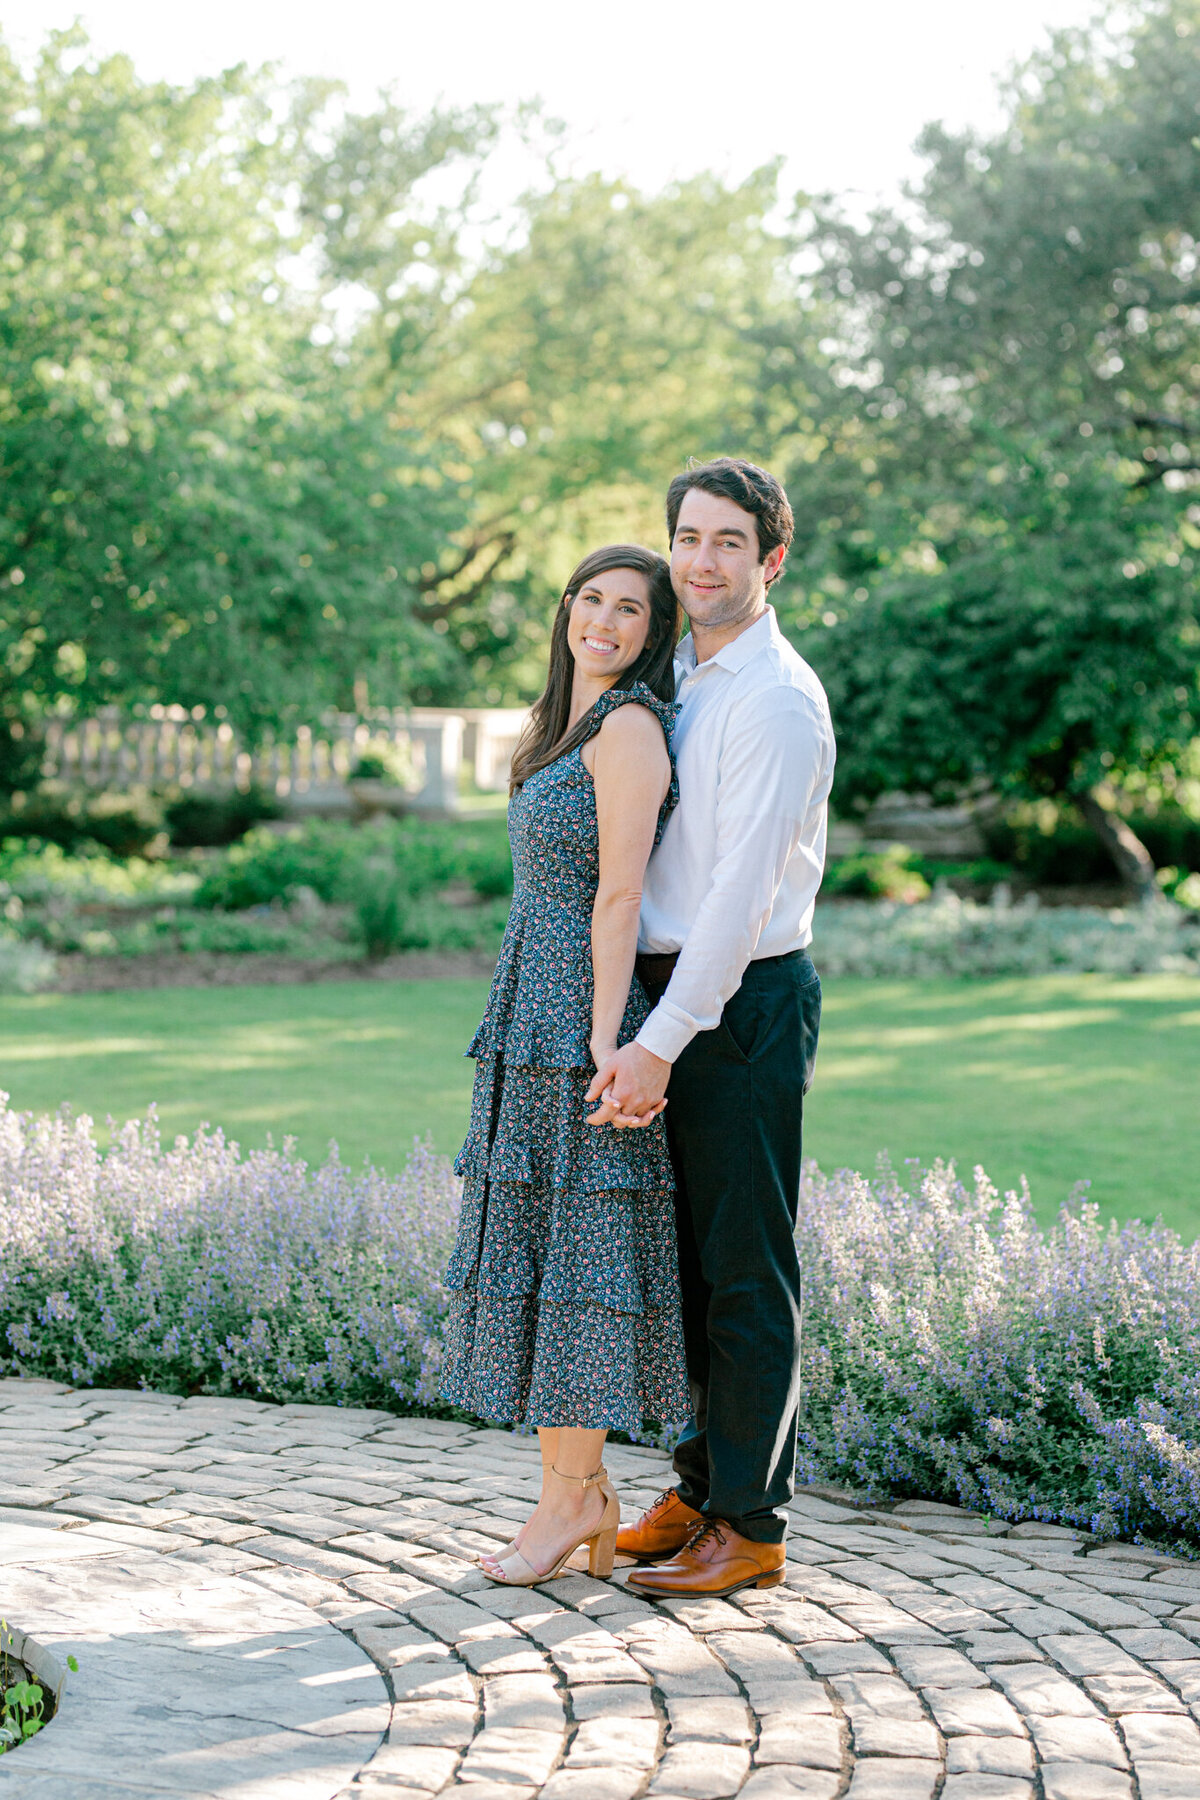 Victoria & Nick's Preston Hollow Engagement Session | Dallas Wedding Photographer | Sami Kathryn Photography-4